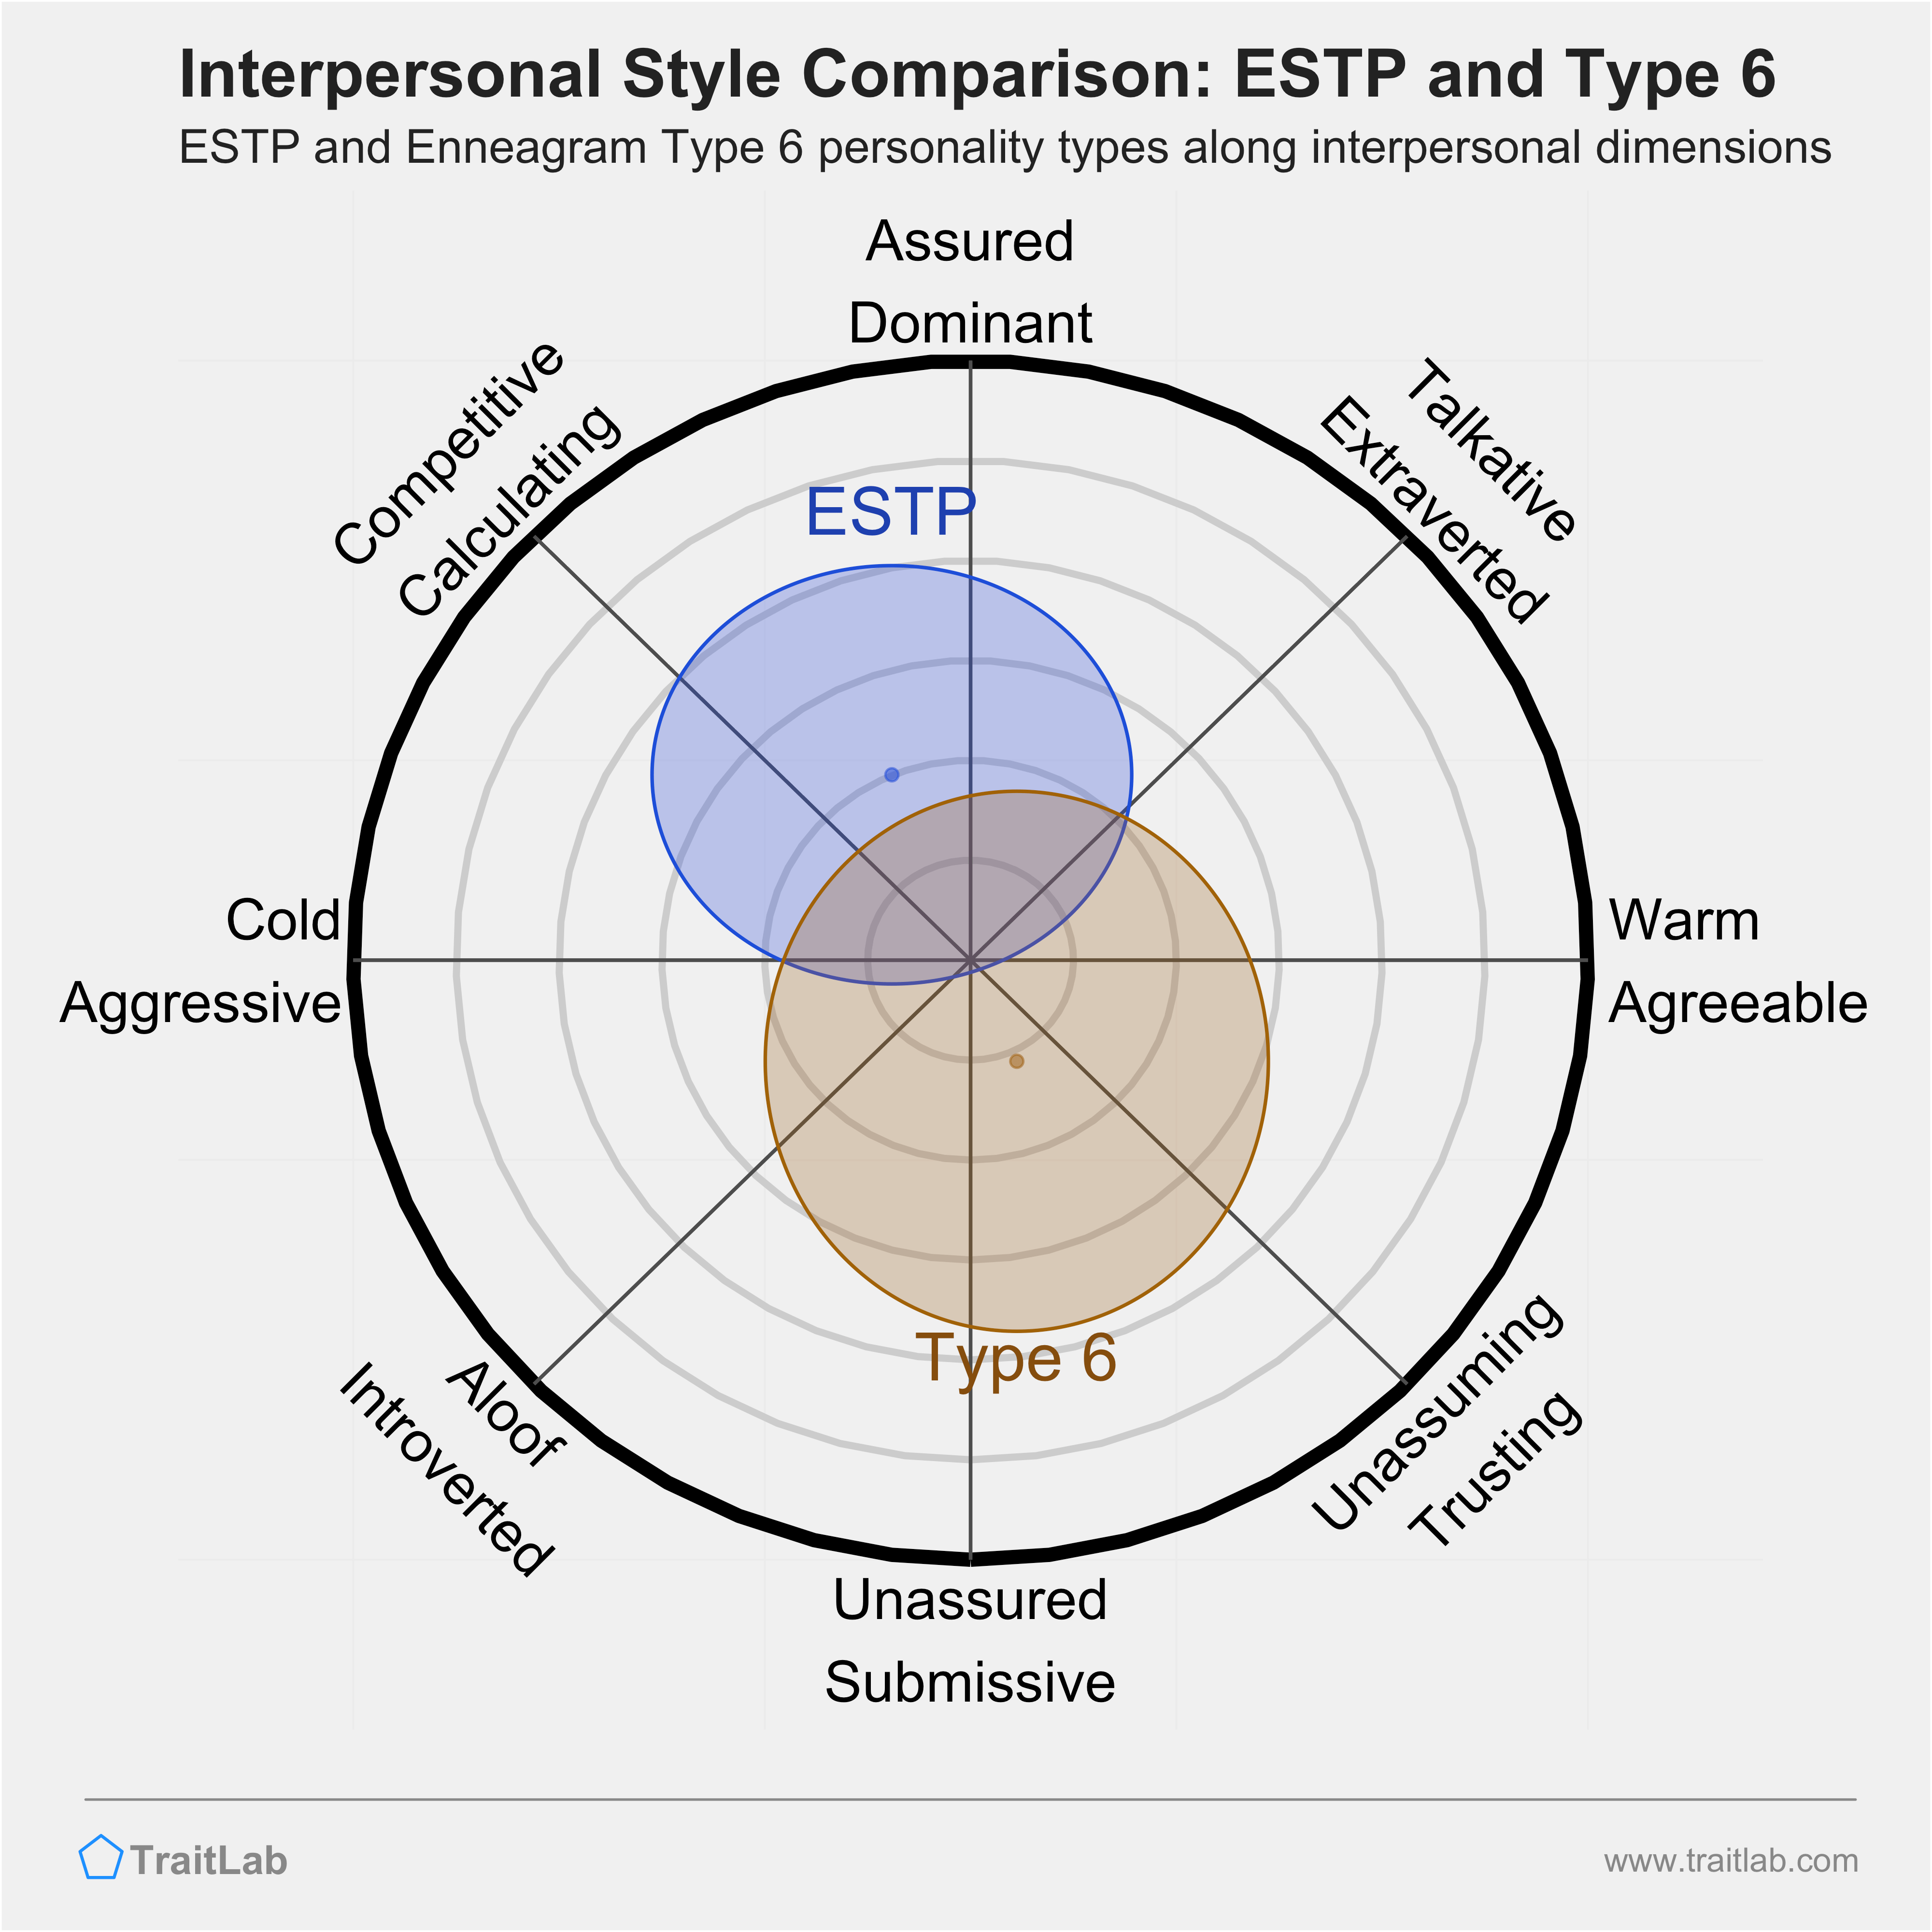 Enneagram ESTP and Type 6 comparison across interpersonal dimensions